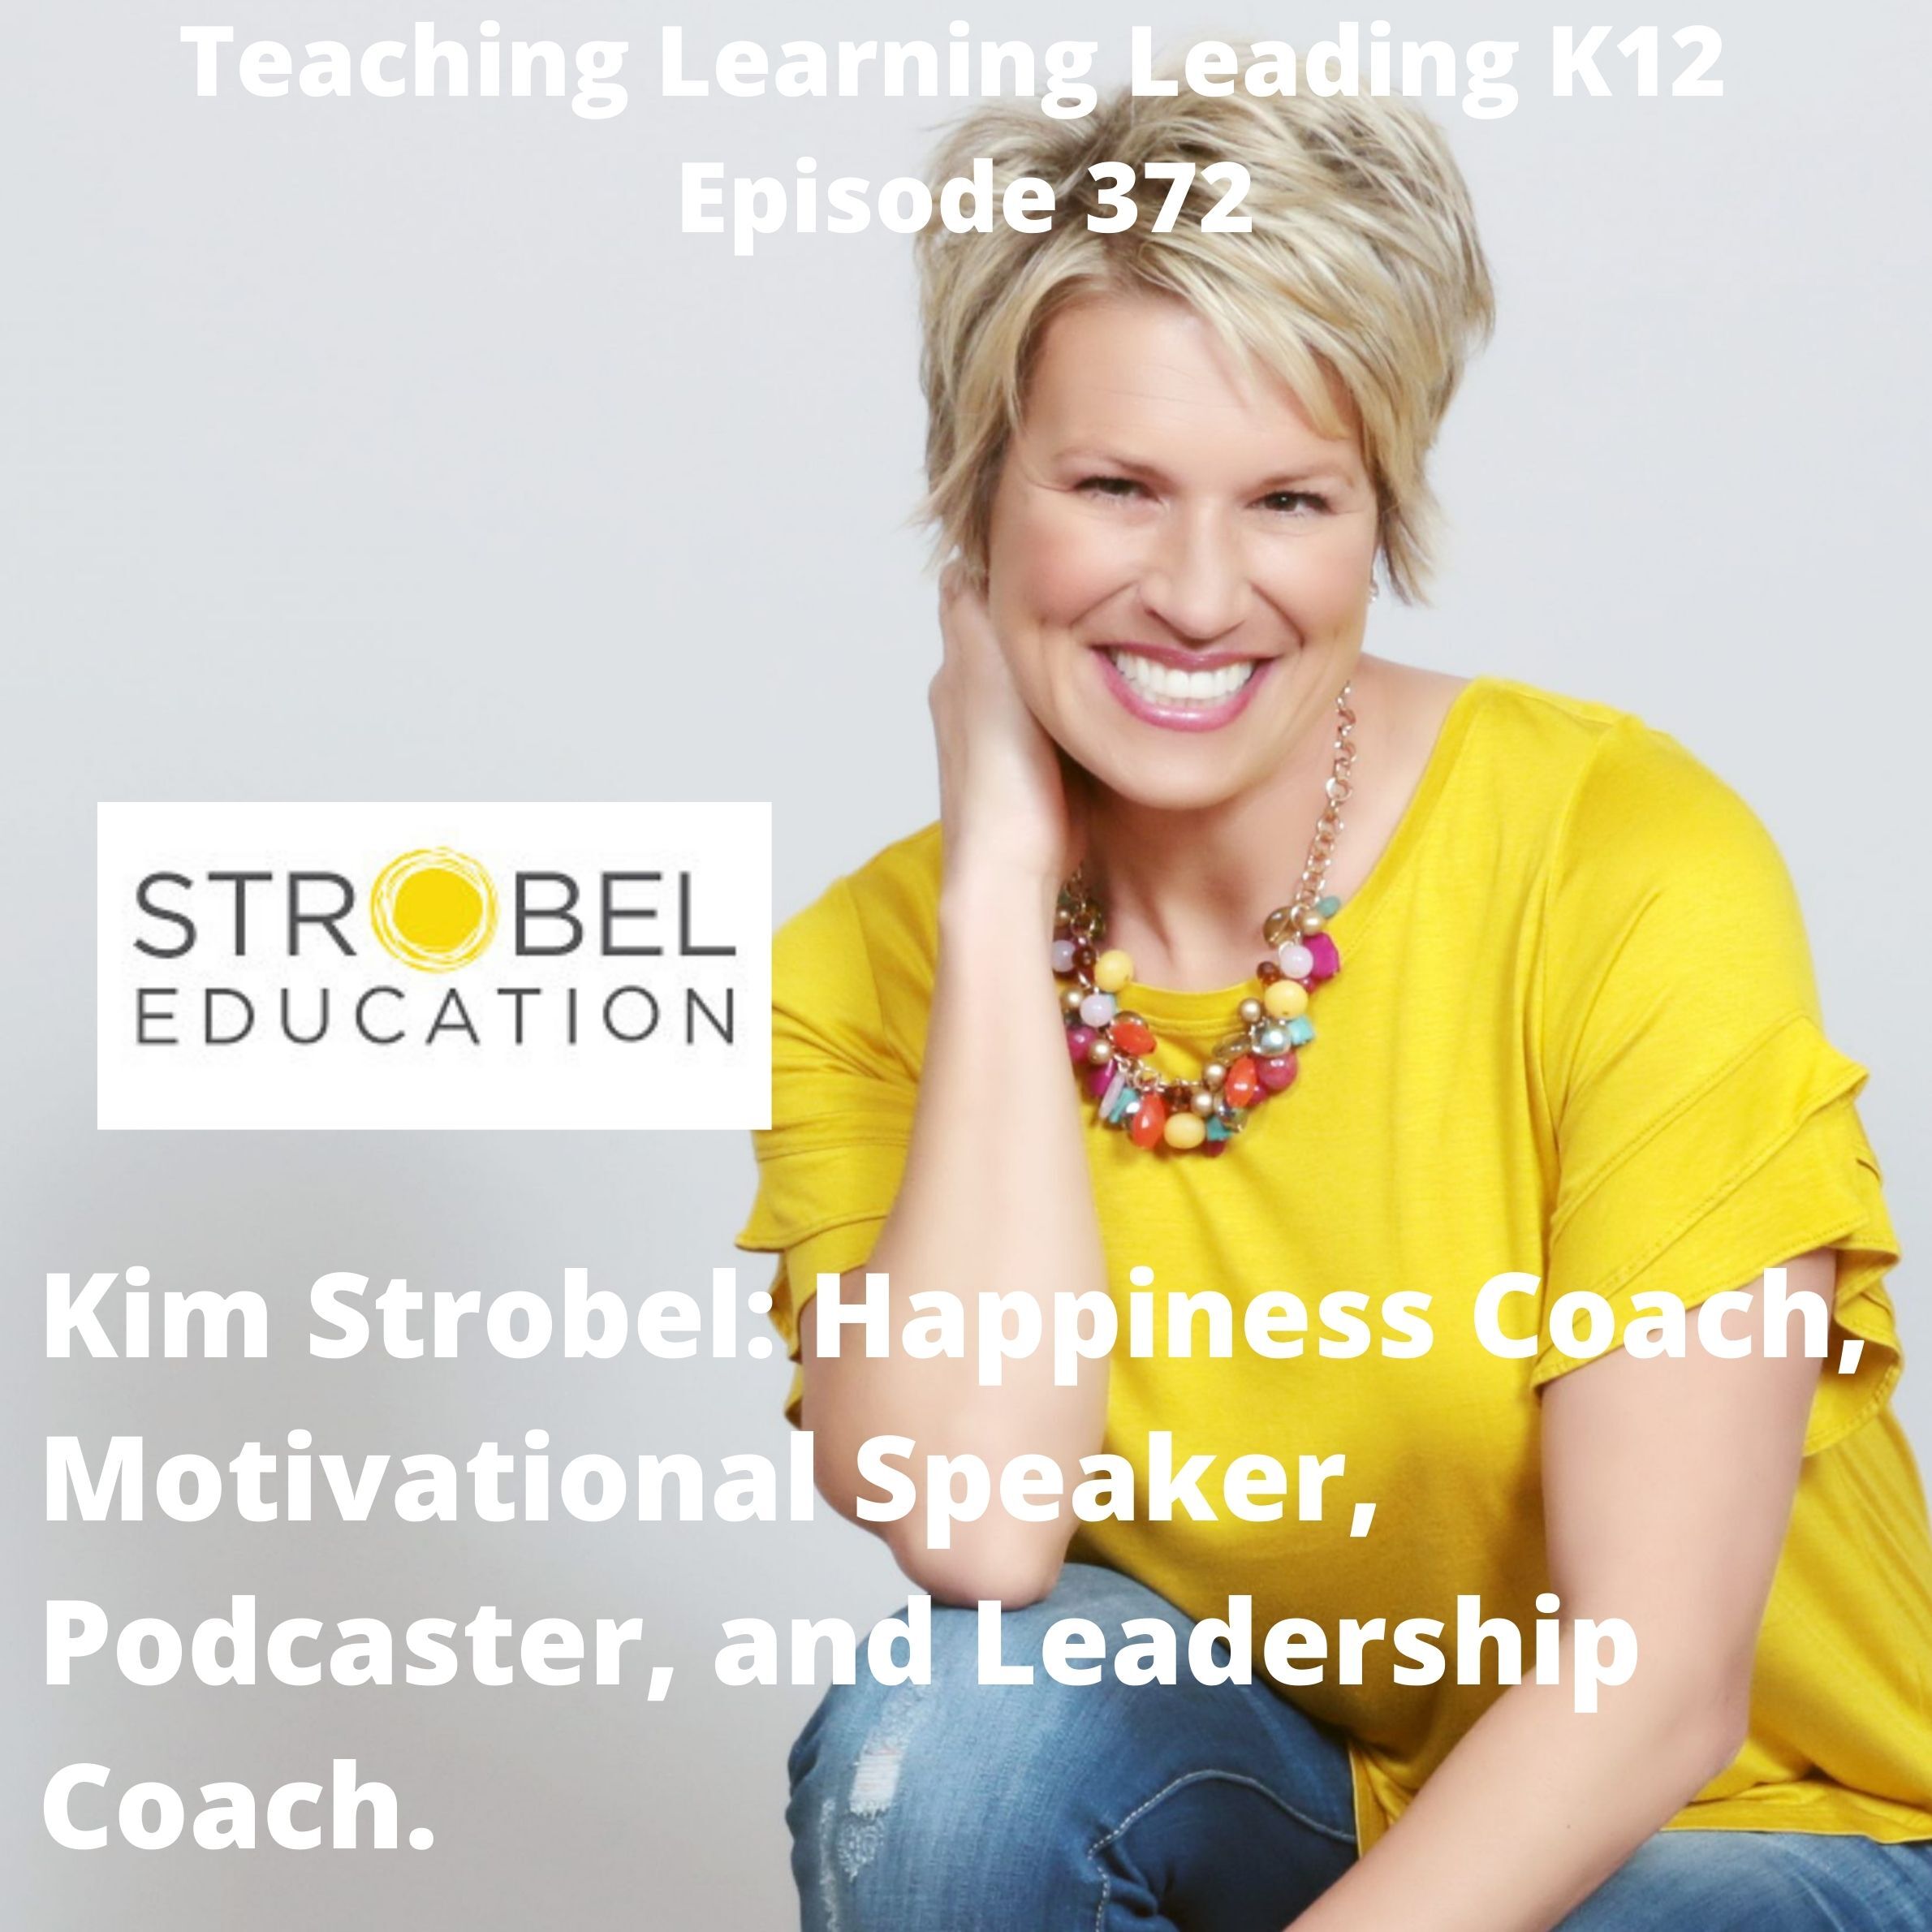 Kim Strobel: Happiness Coach, Motivational Speaker, and Leadership Consultant - 372 Image